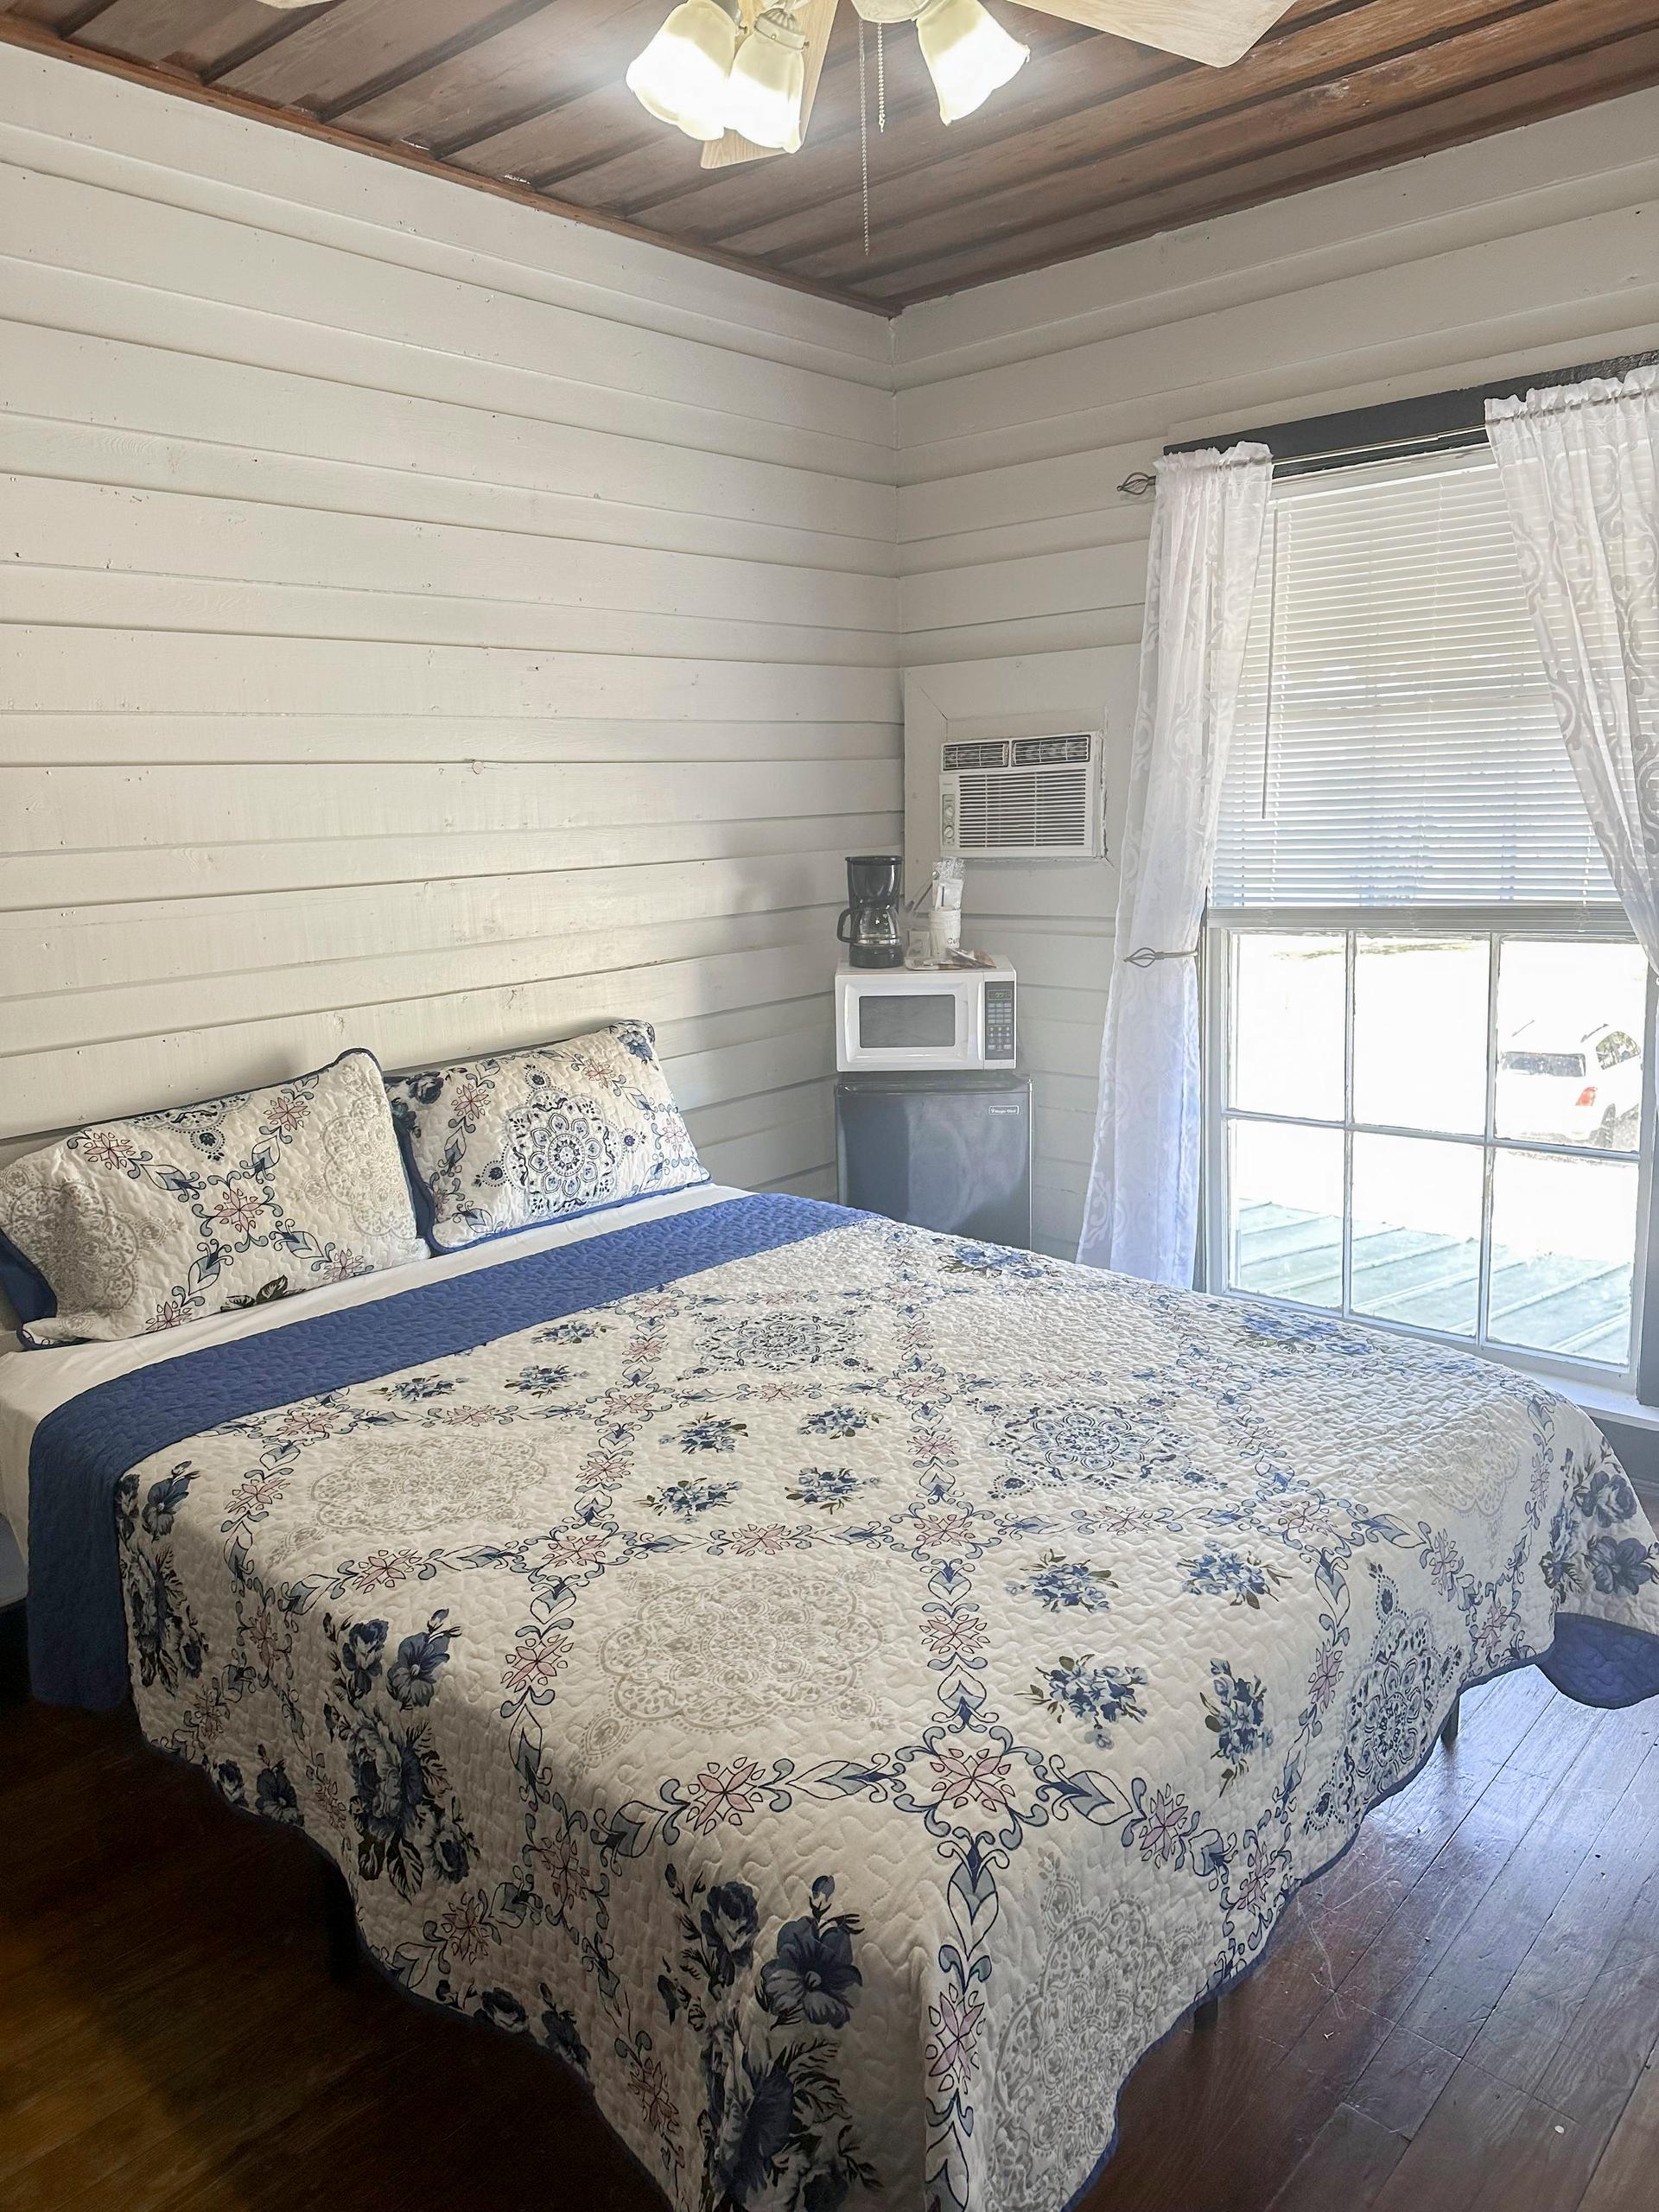 bedroom, detected:bed, window blind, ceiling fan